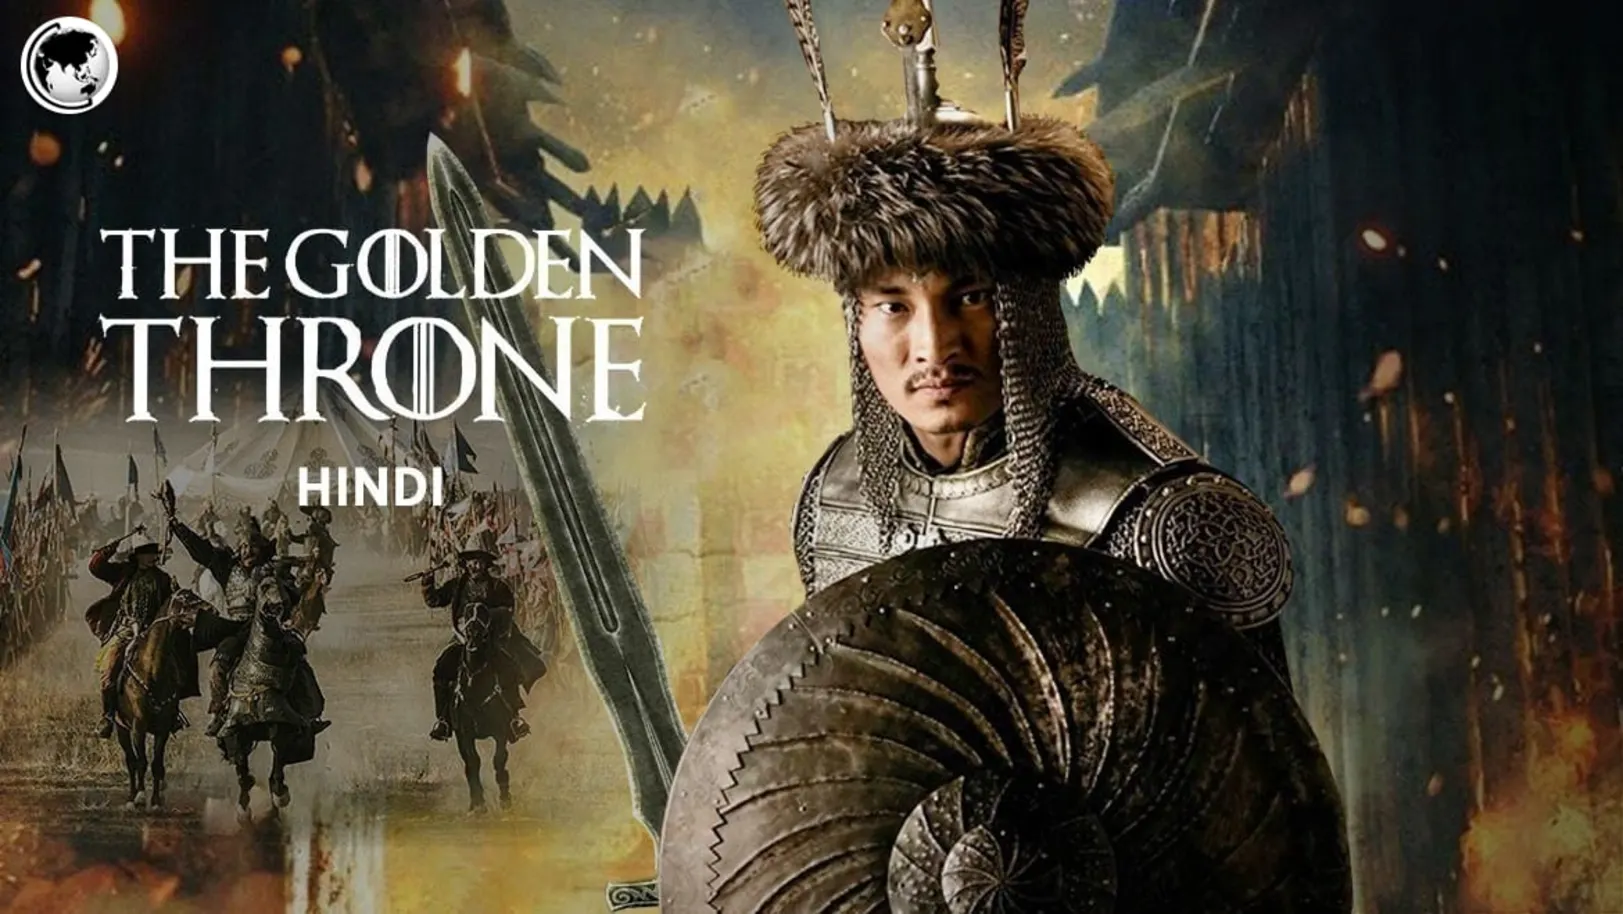 Kazakh Khanate: The Golden Throne Movie